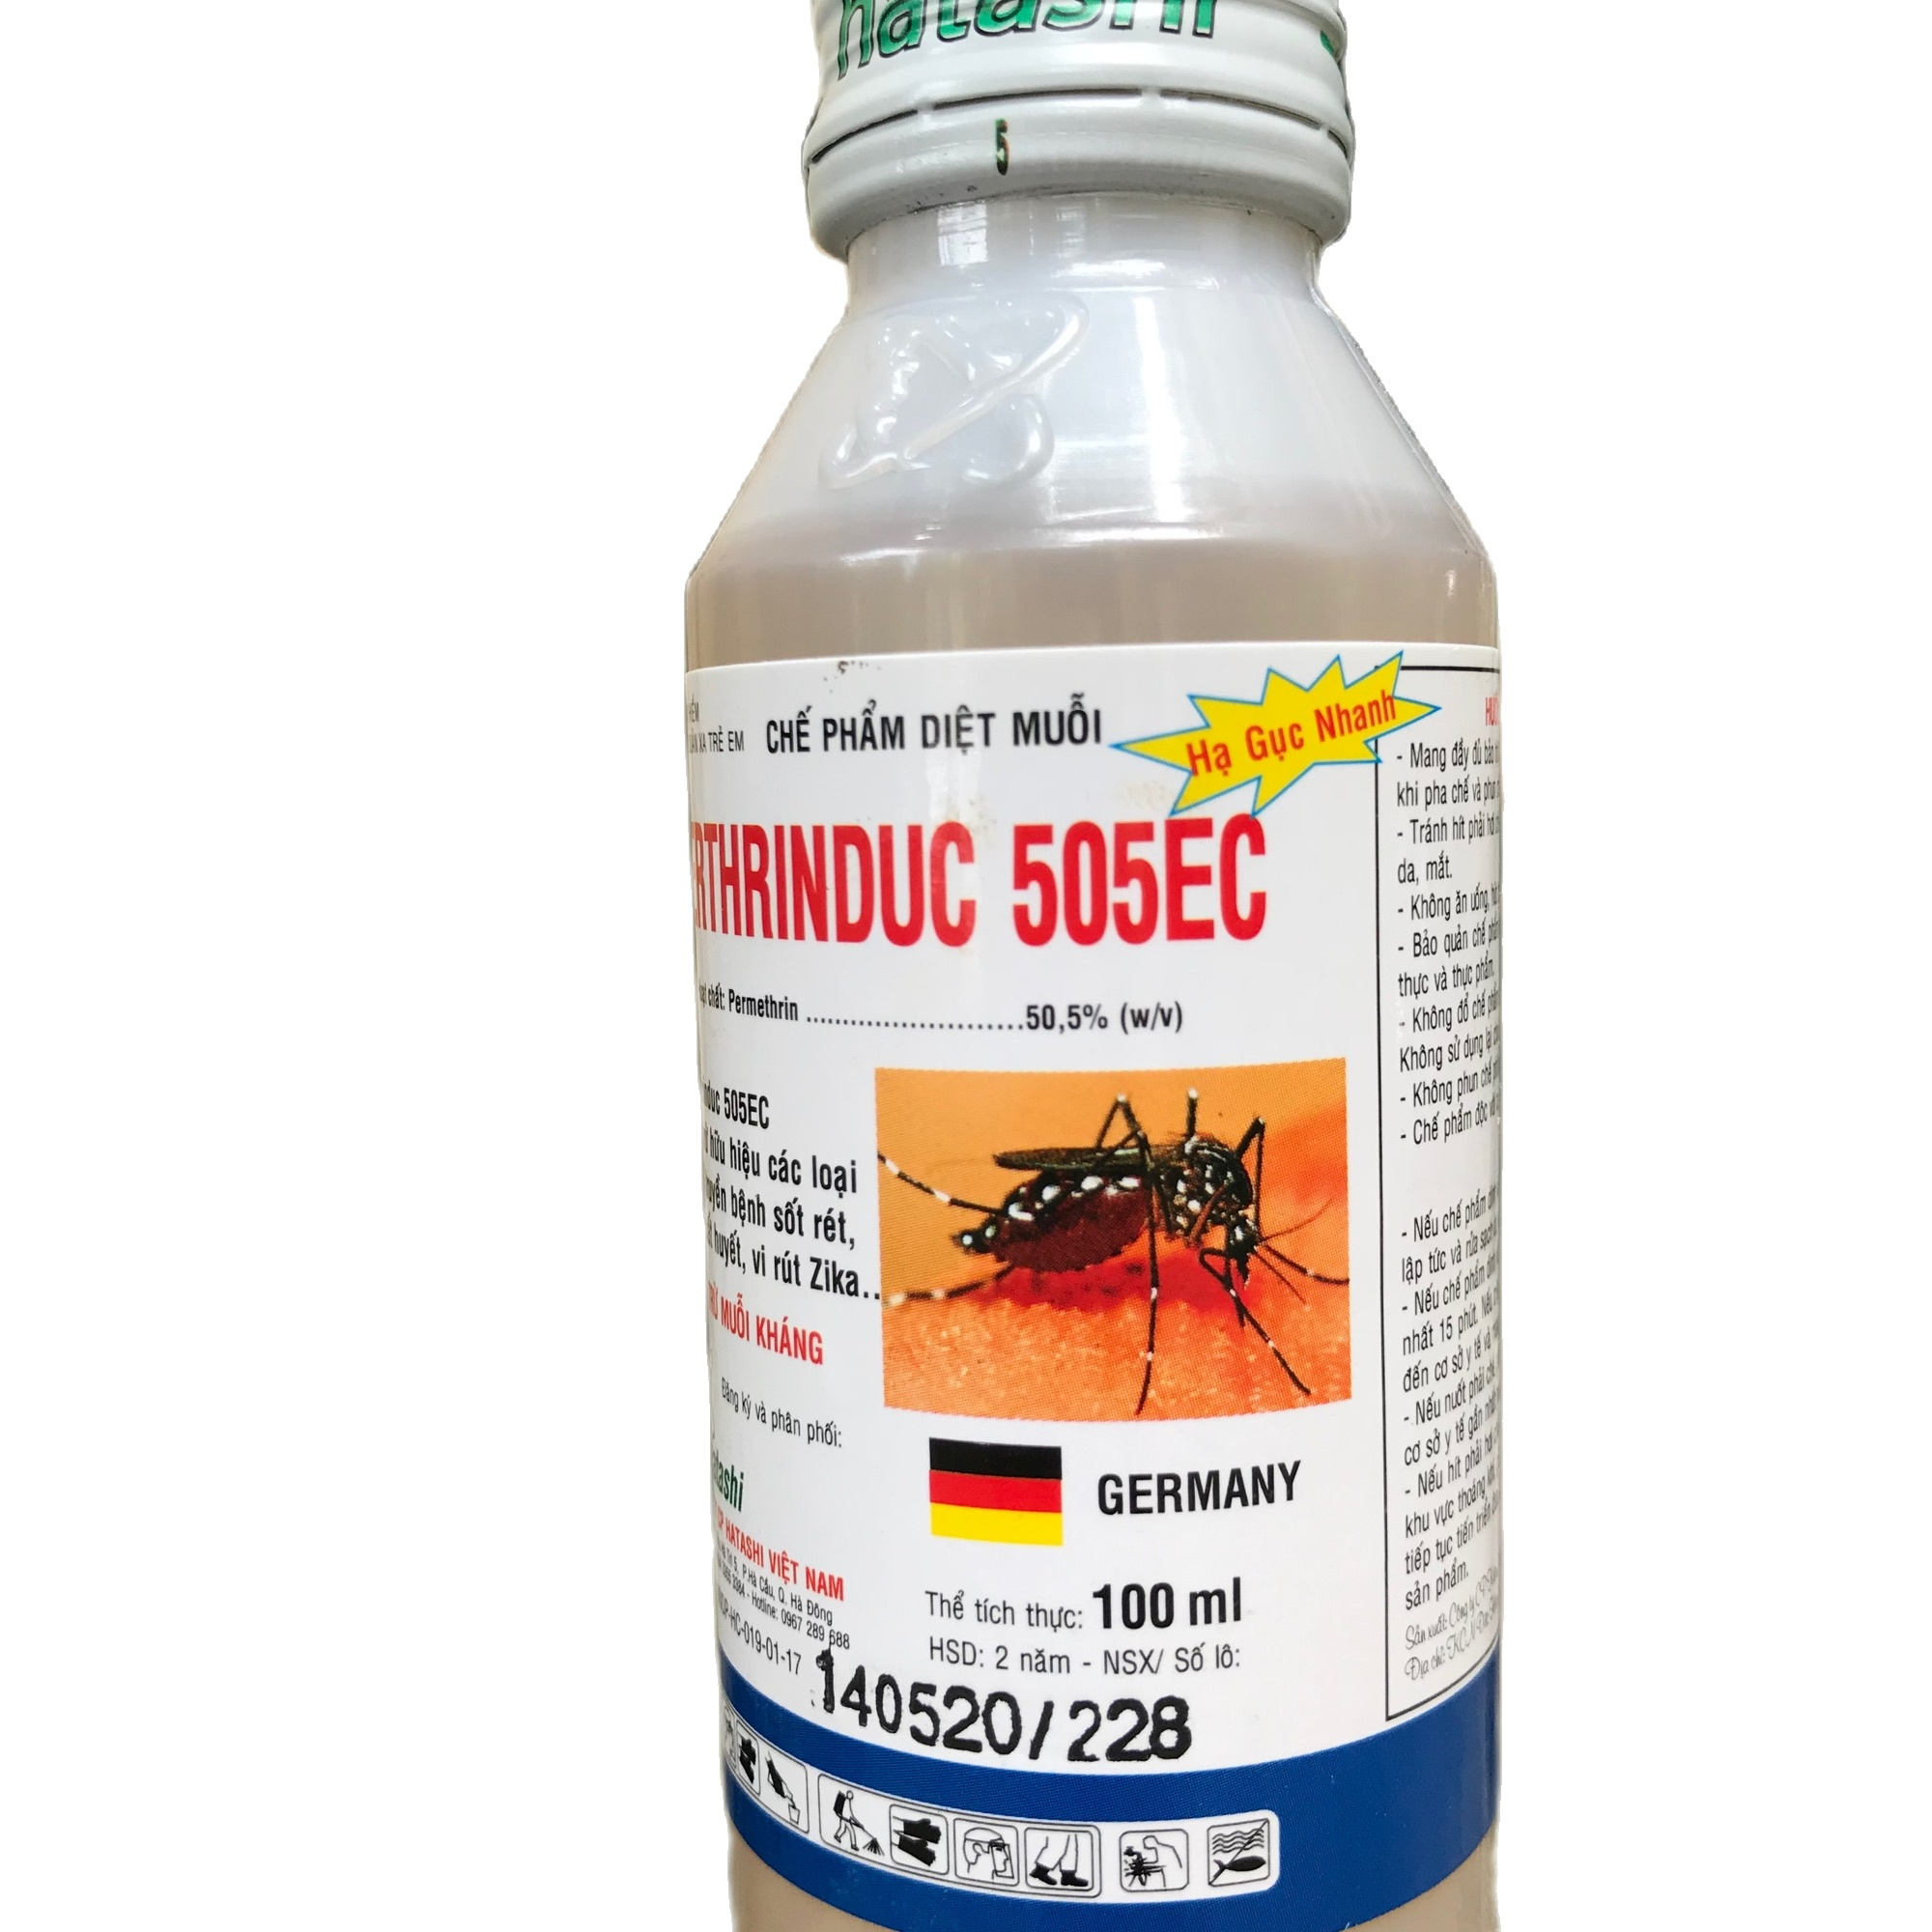 Thuốc xịt muỗi y tế Perthrinduc – Permethrin 505ec 100ml CHLB Đức thuốc xịt muỗi y tế nguyên liệu nhập khẩu